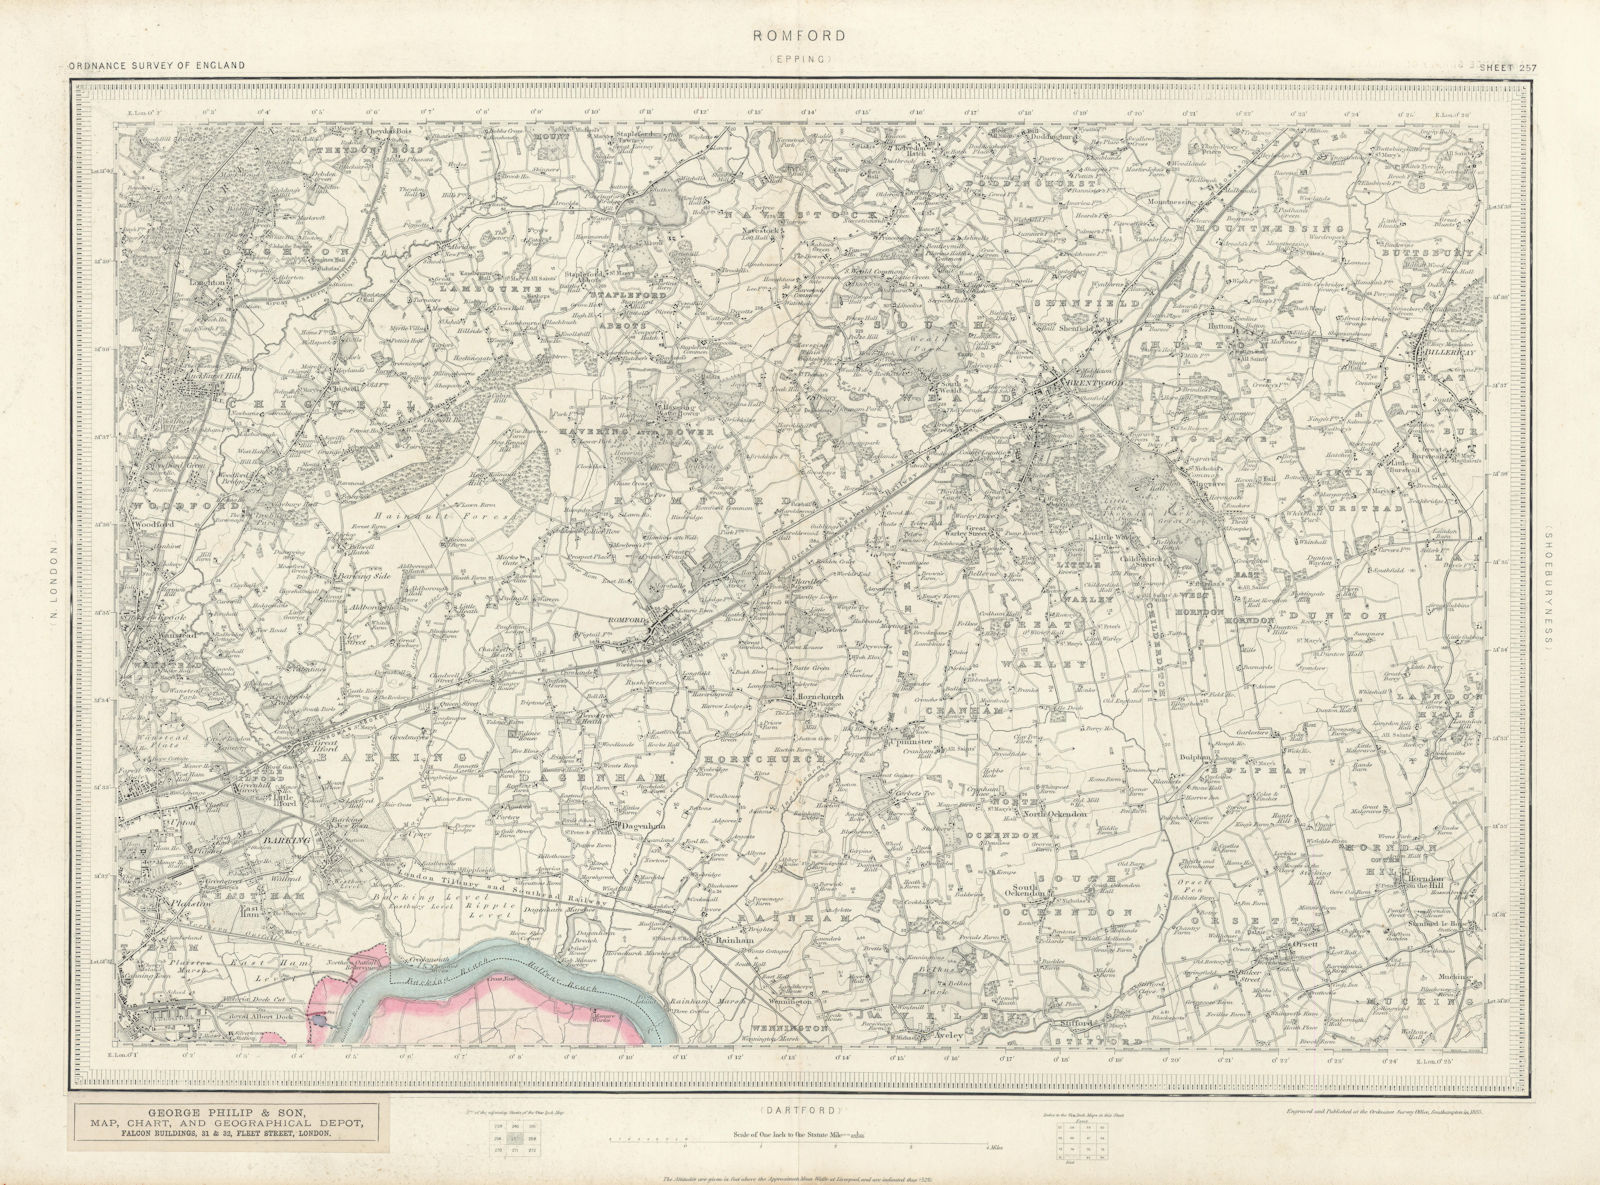 Ordnance Survey Sheet 257 Romford. NE London Essex Brentwood Barking 1883 map